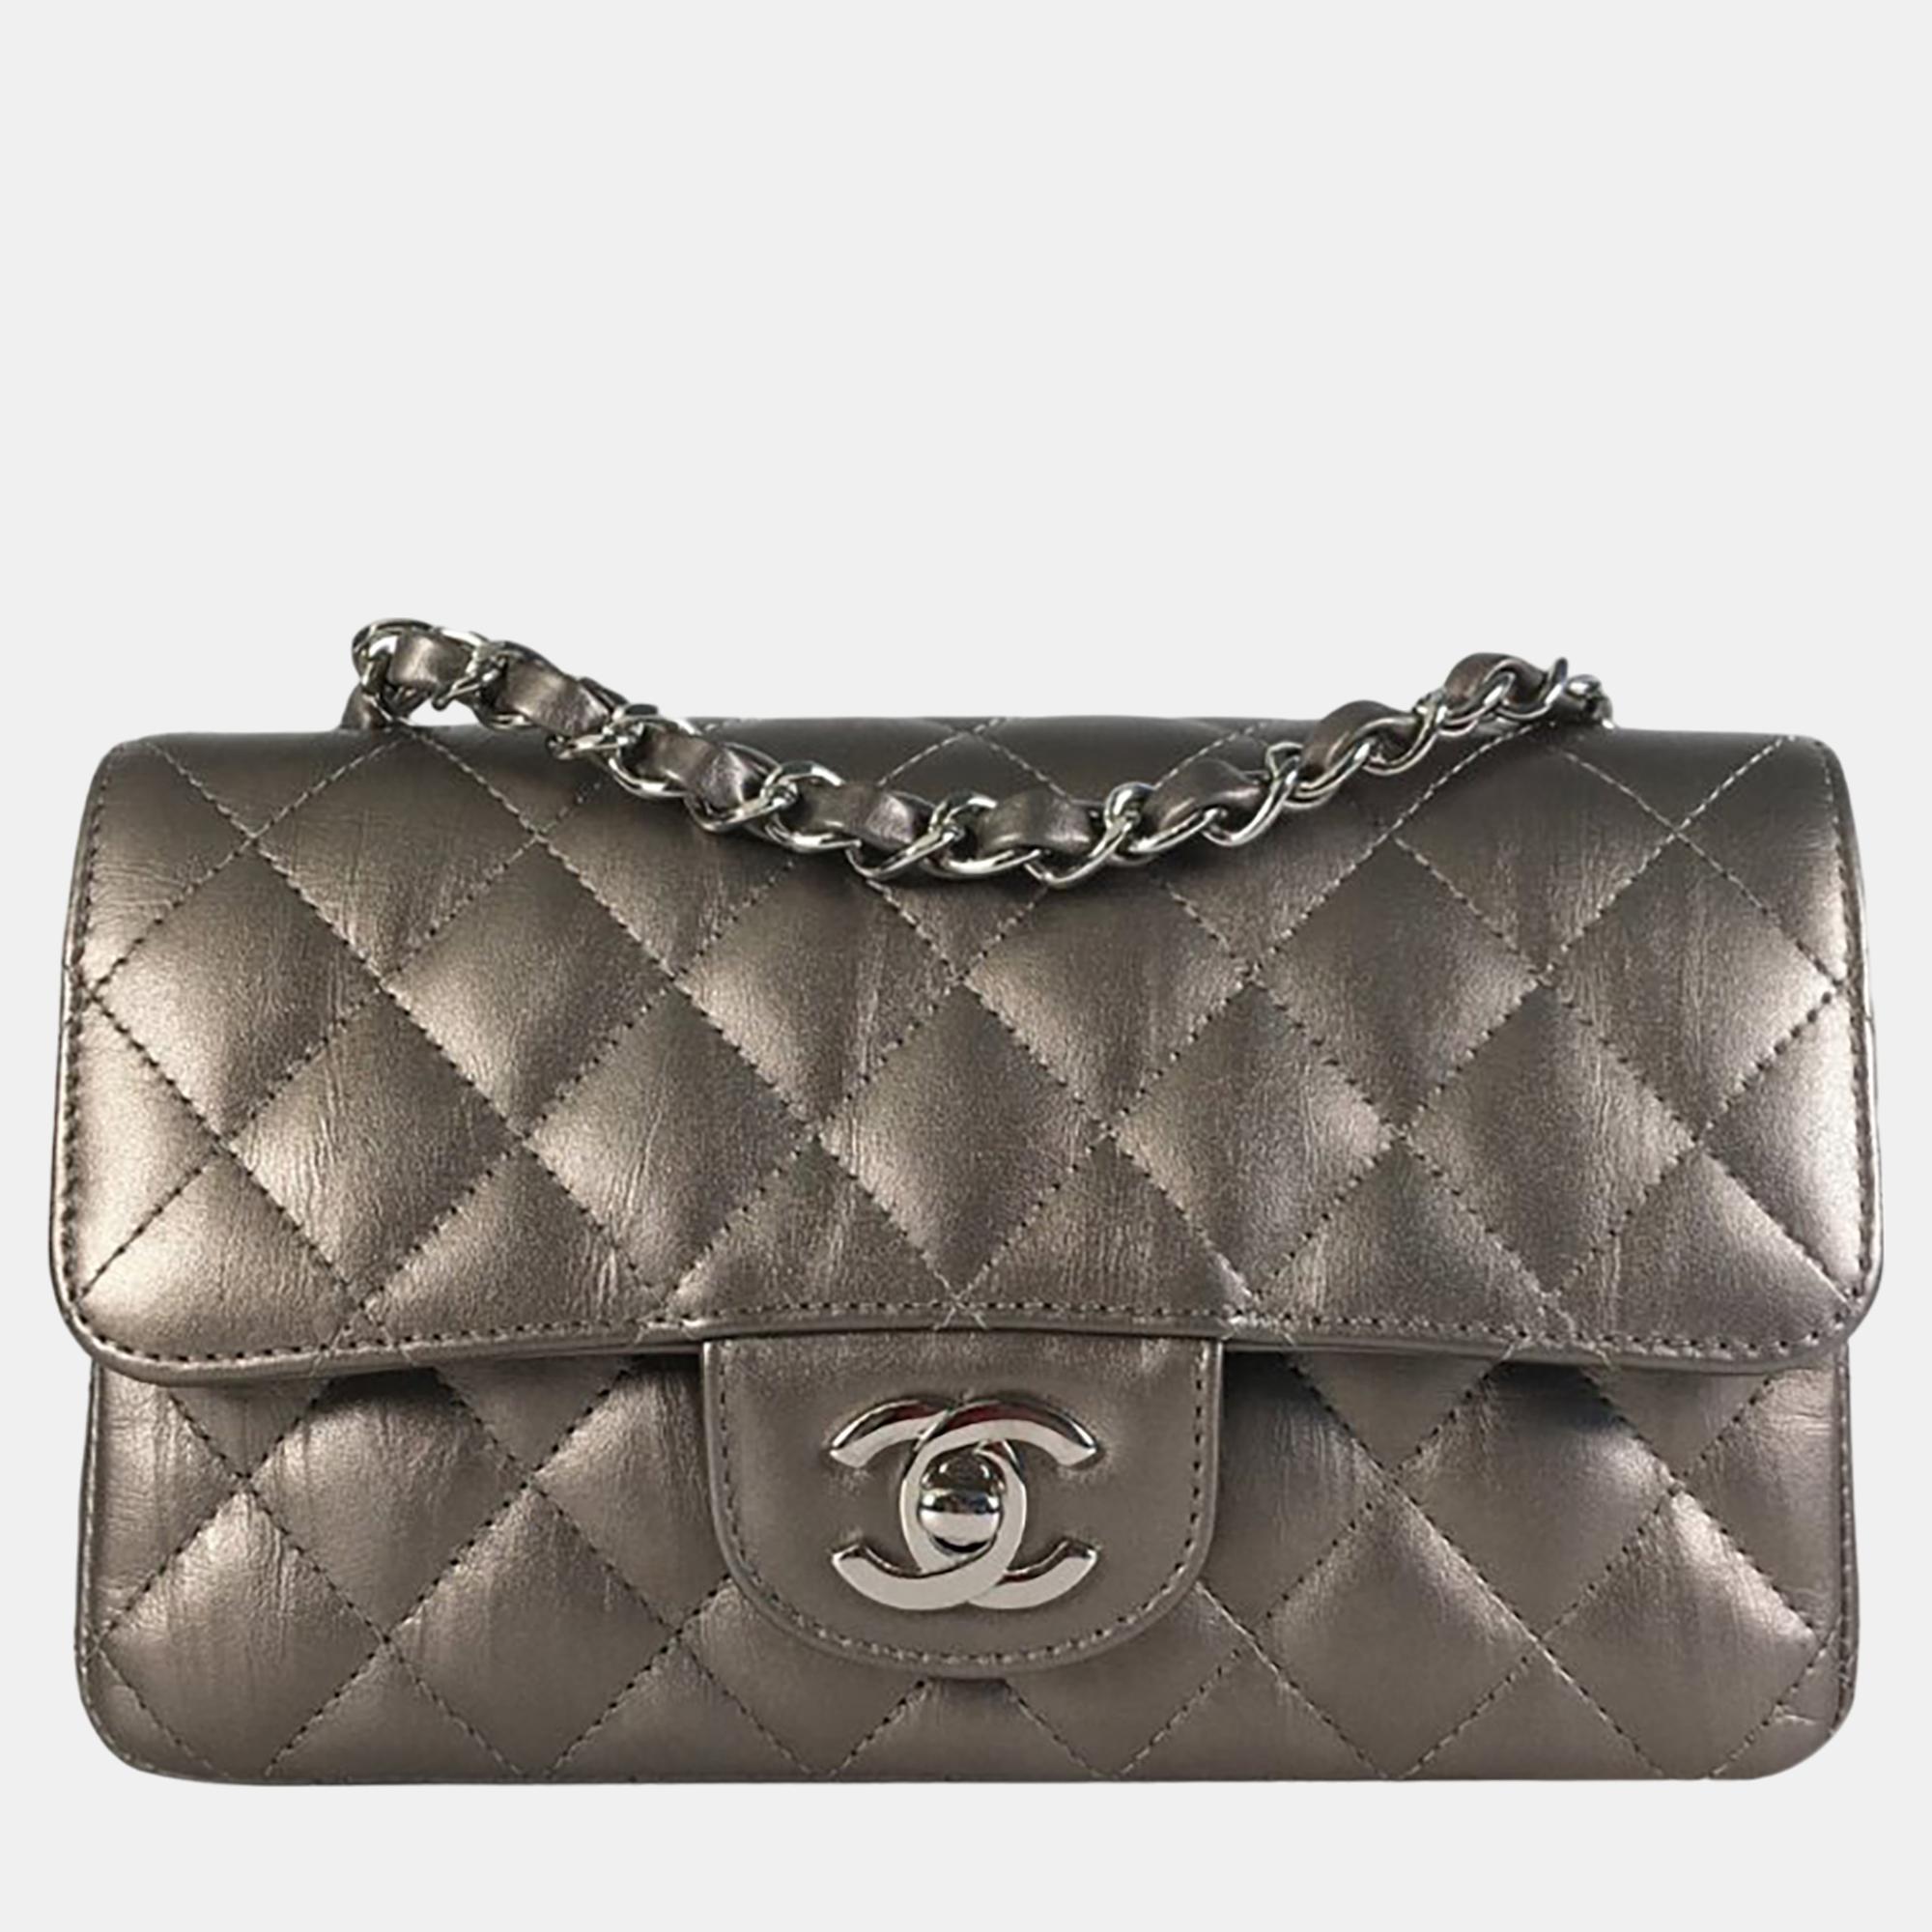 Chanel grey mini rectangular classic metallic calfskin single flap